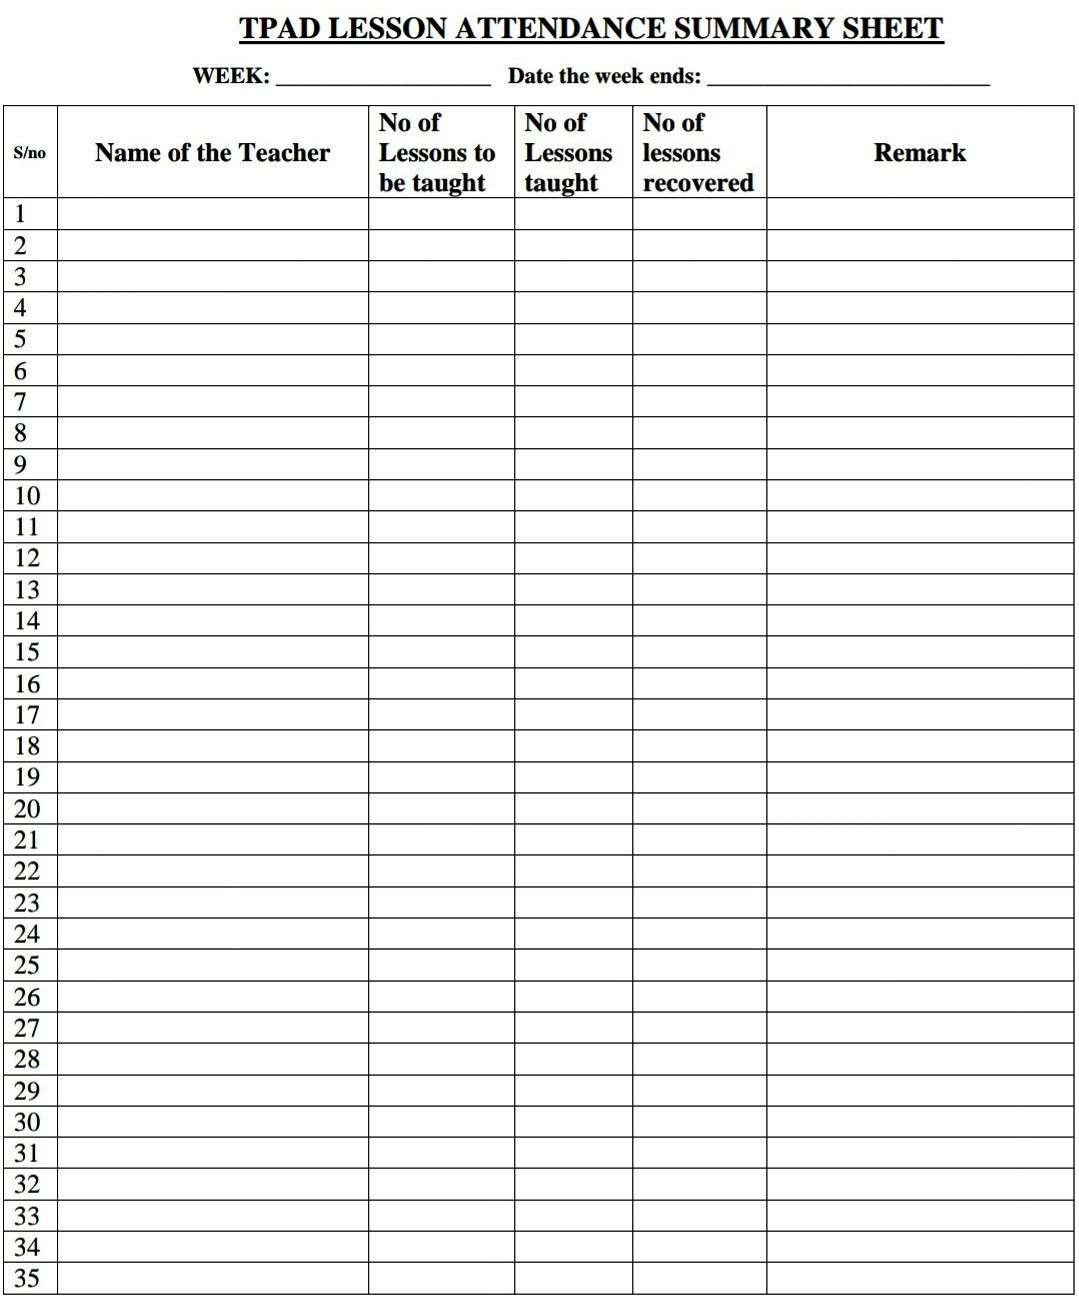 TPAD Lesson attendance summary sheet.